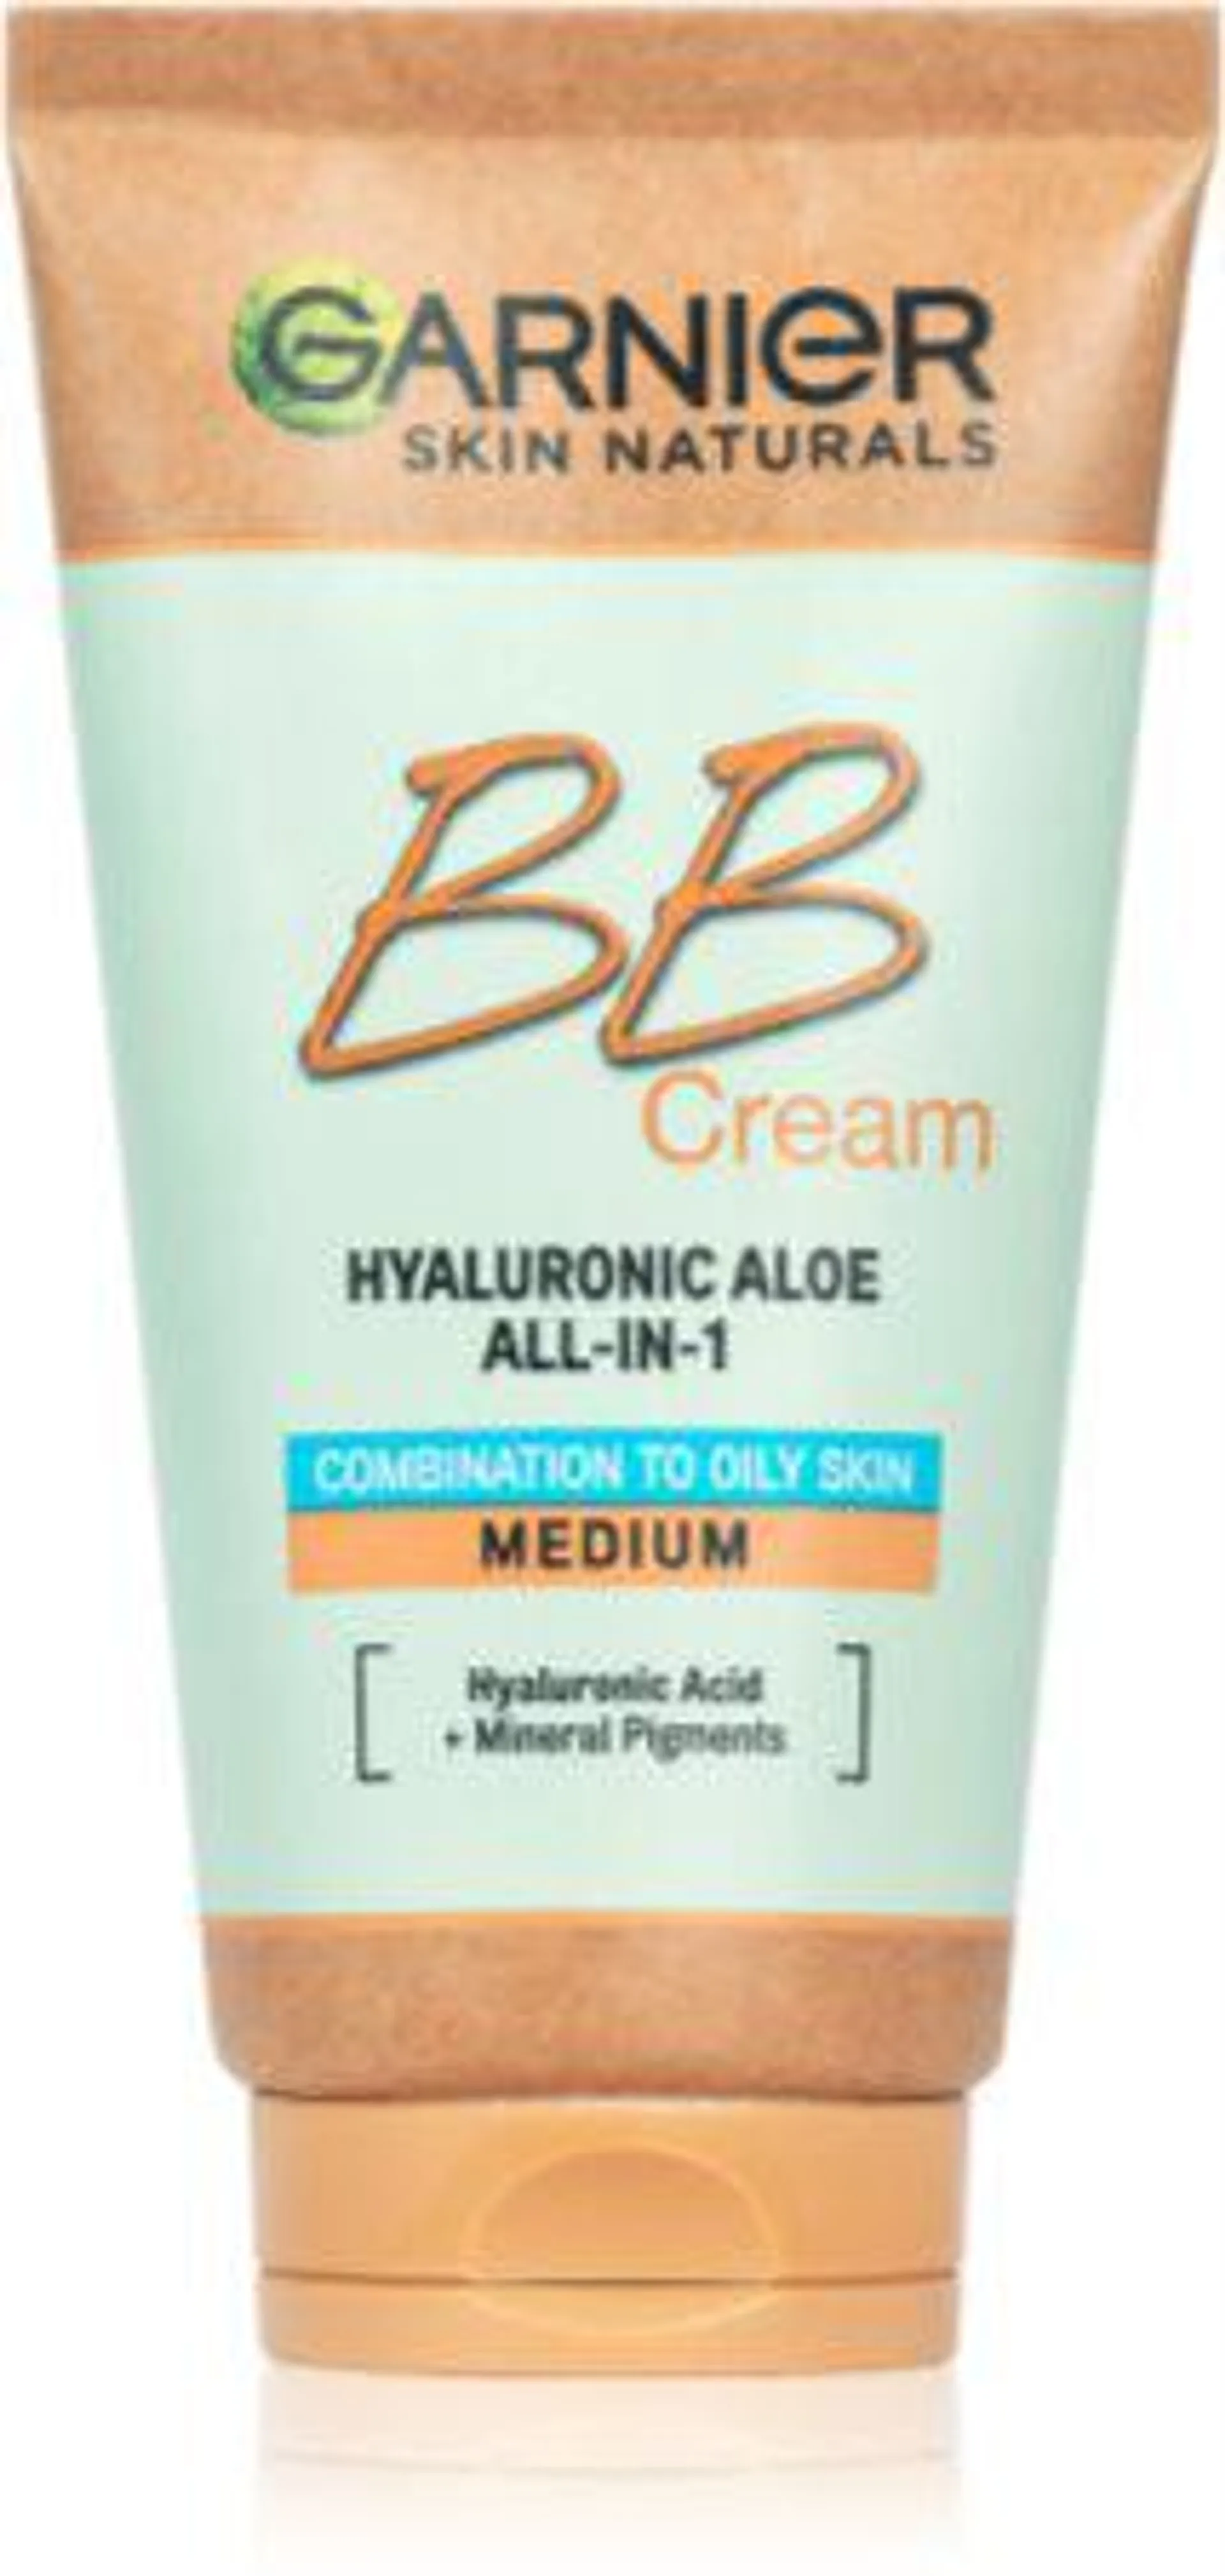 Hyaluronic Aloe All-in-1 BB Cream